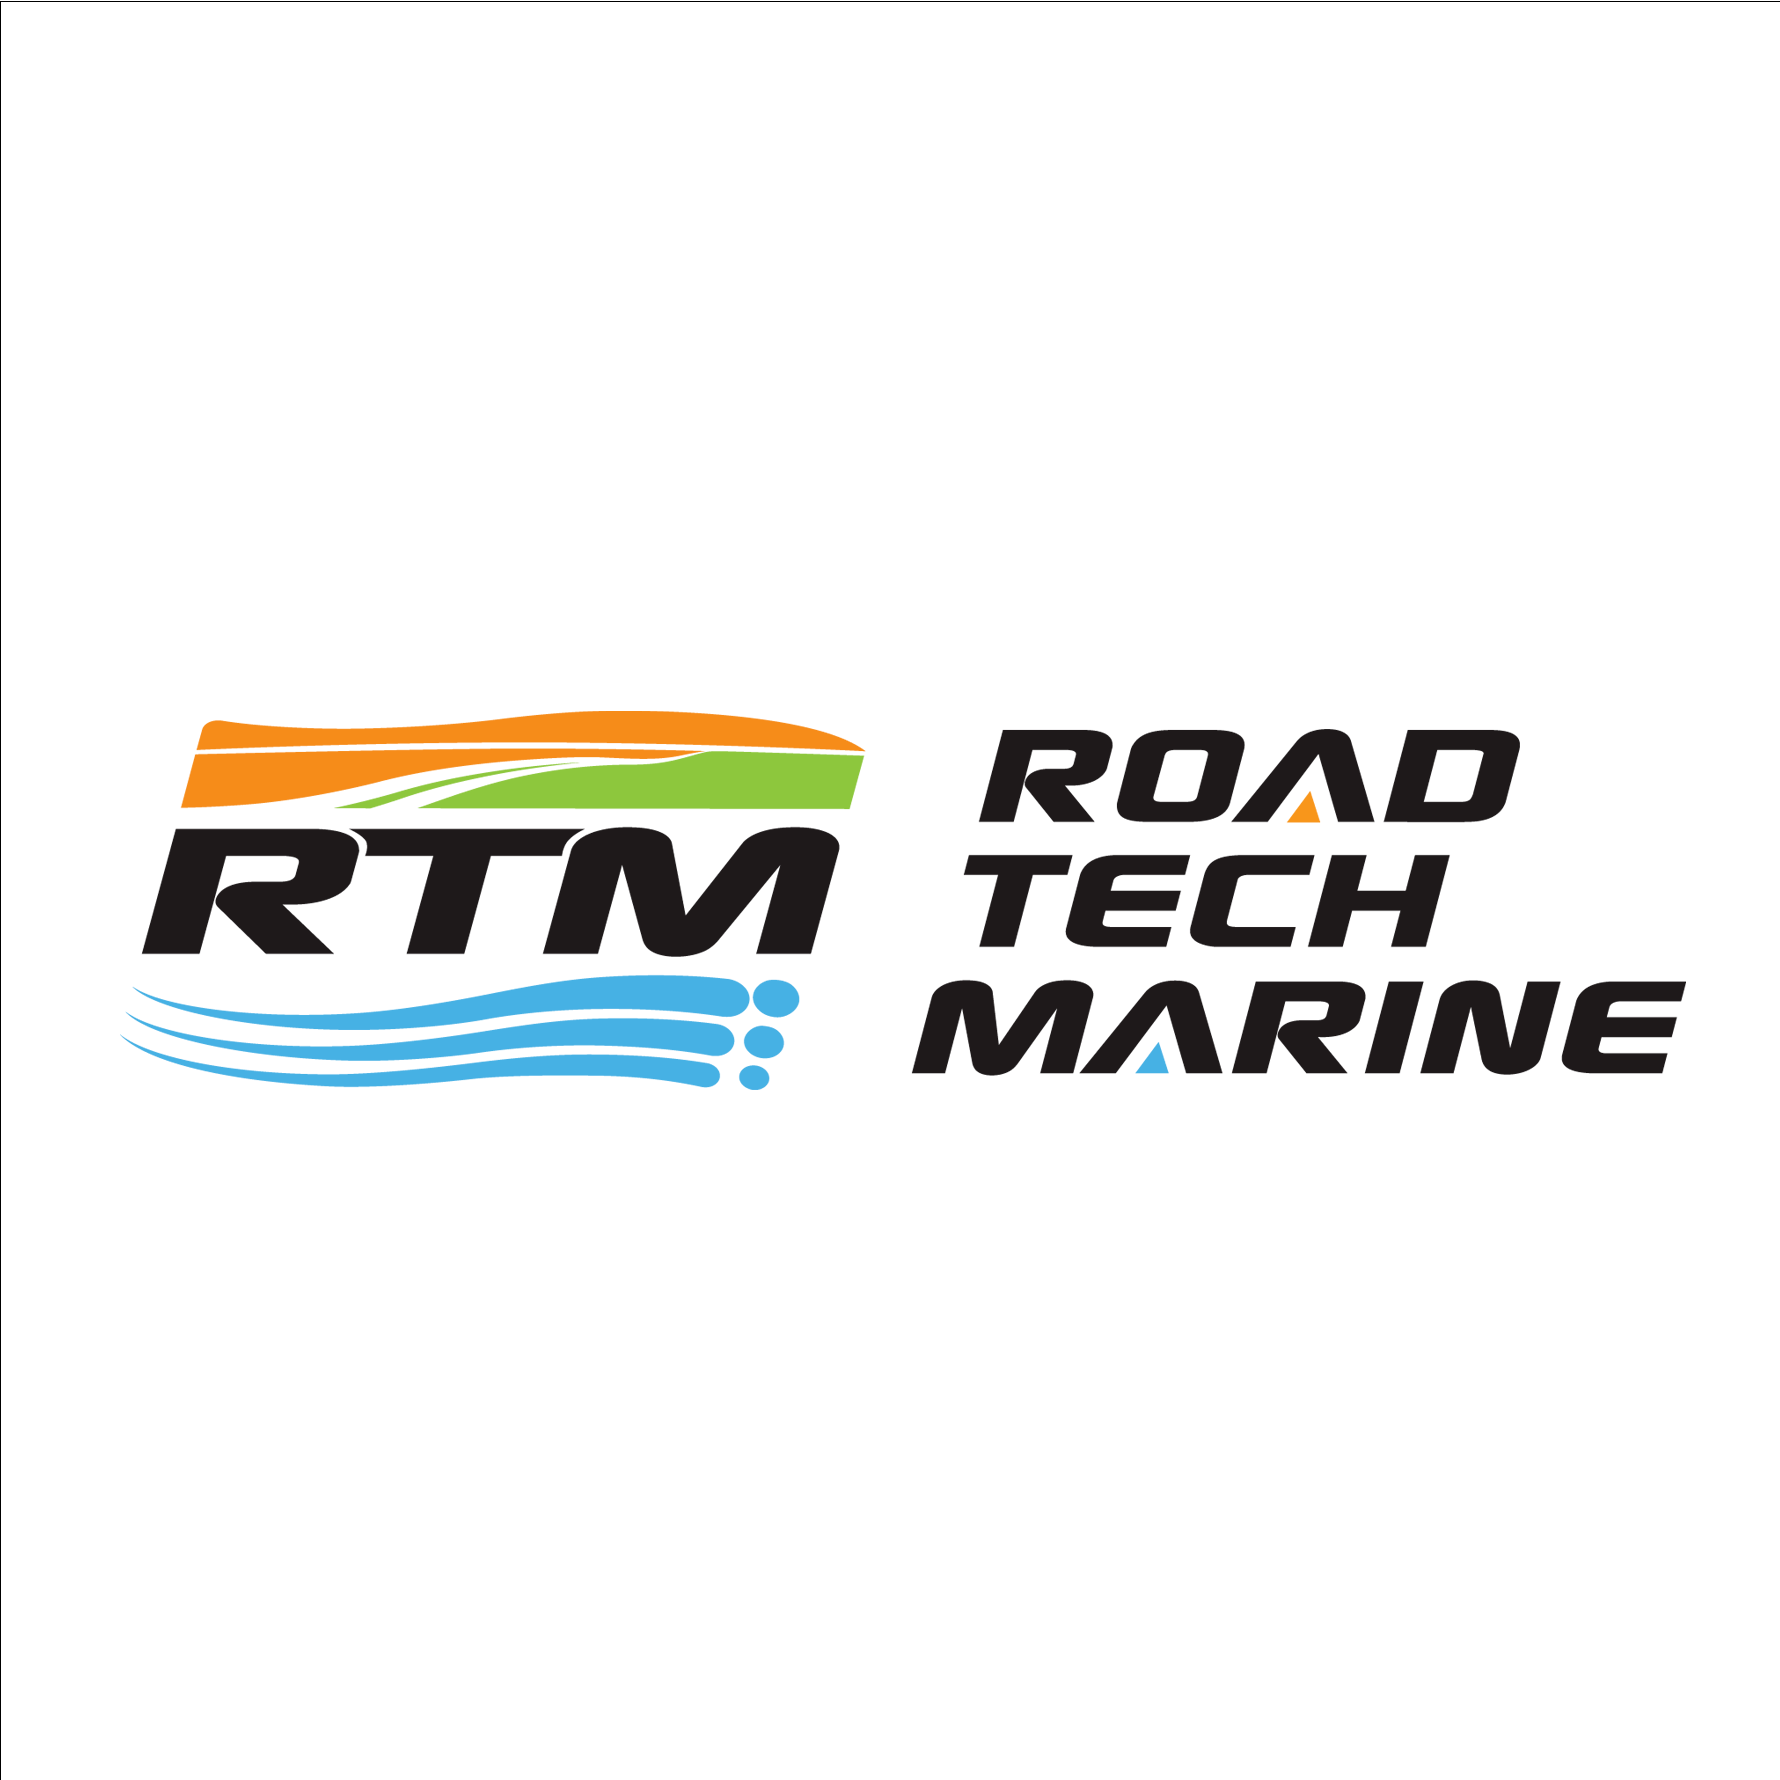 RTM - Road Tech Marine Narrabeen North Narrabeen (02) 8914 0885